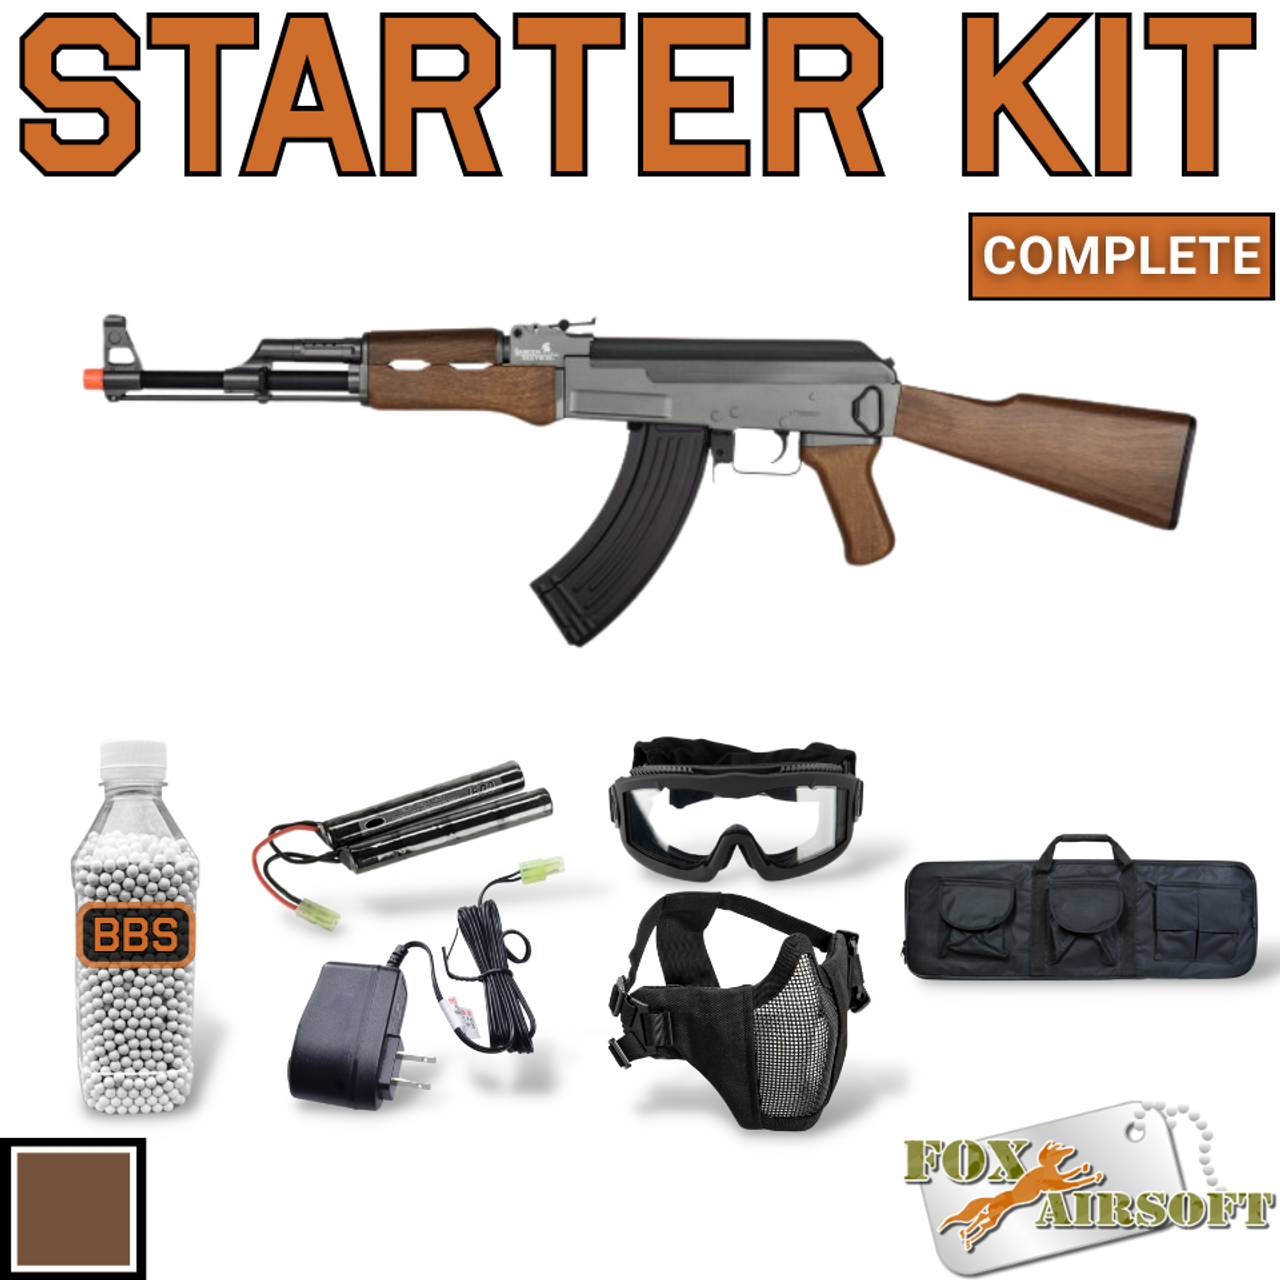 Fox Airsoft Ultimate Starter Kit